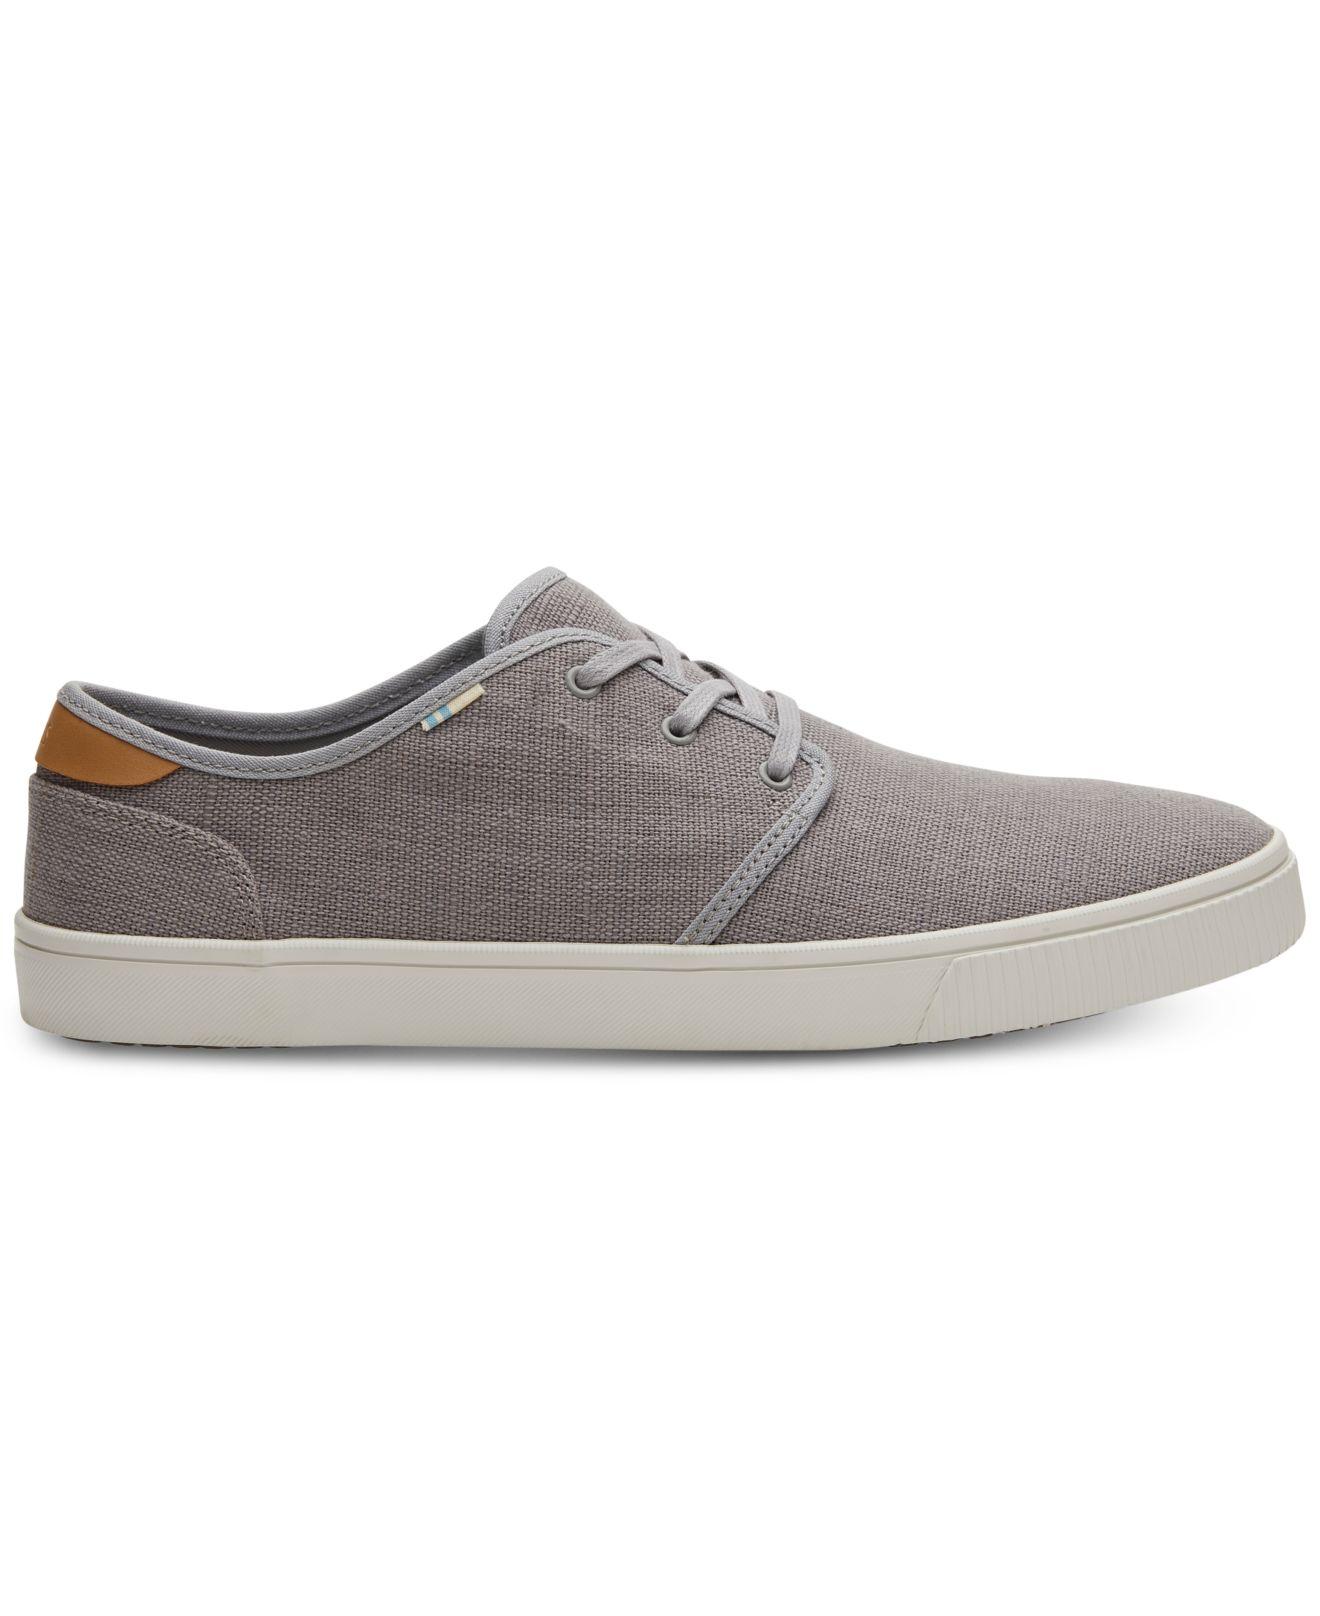 toms gray sneakers